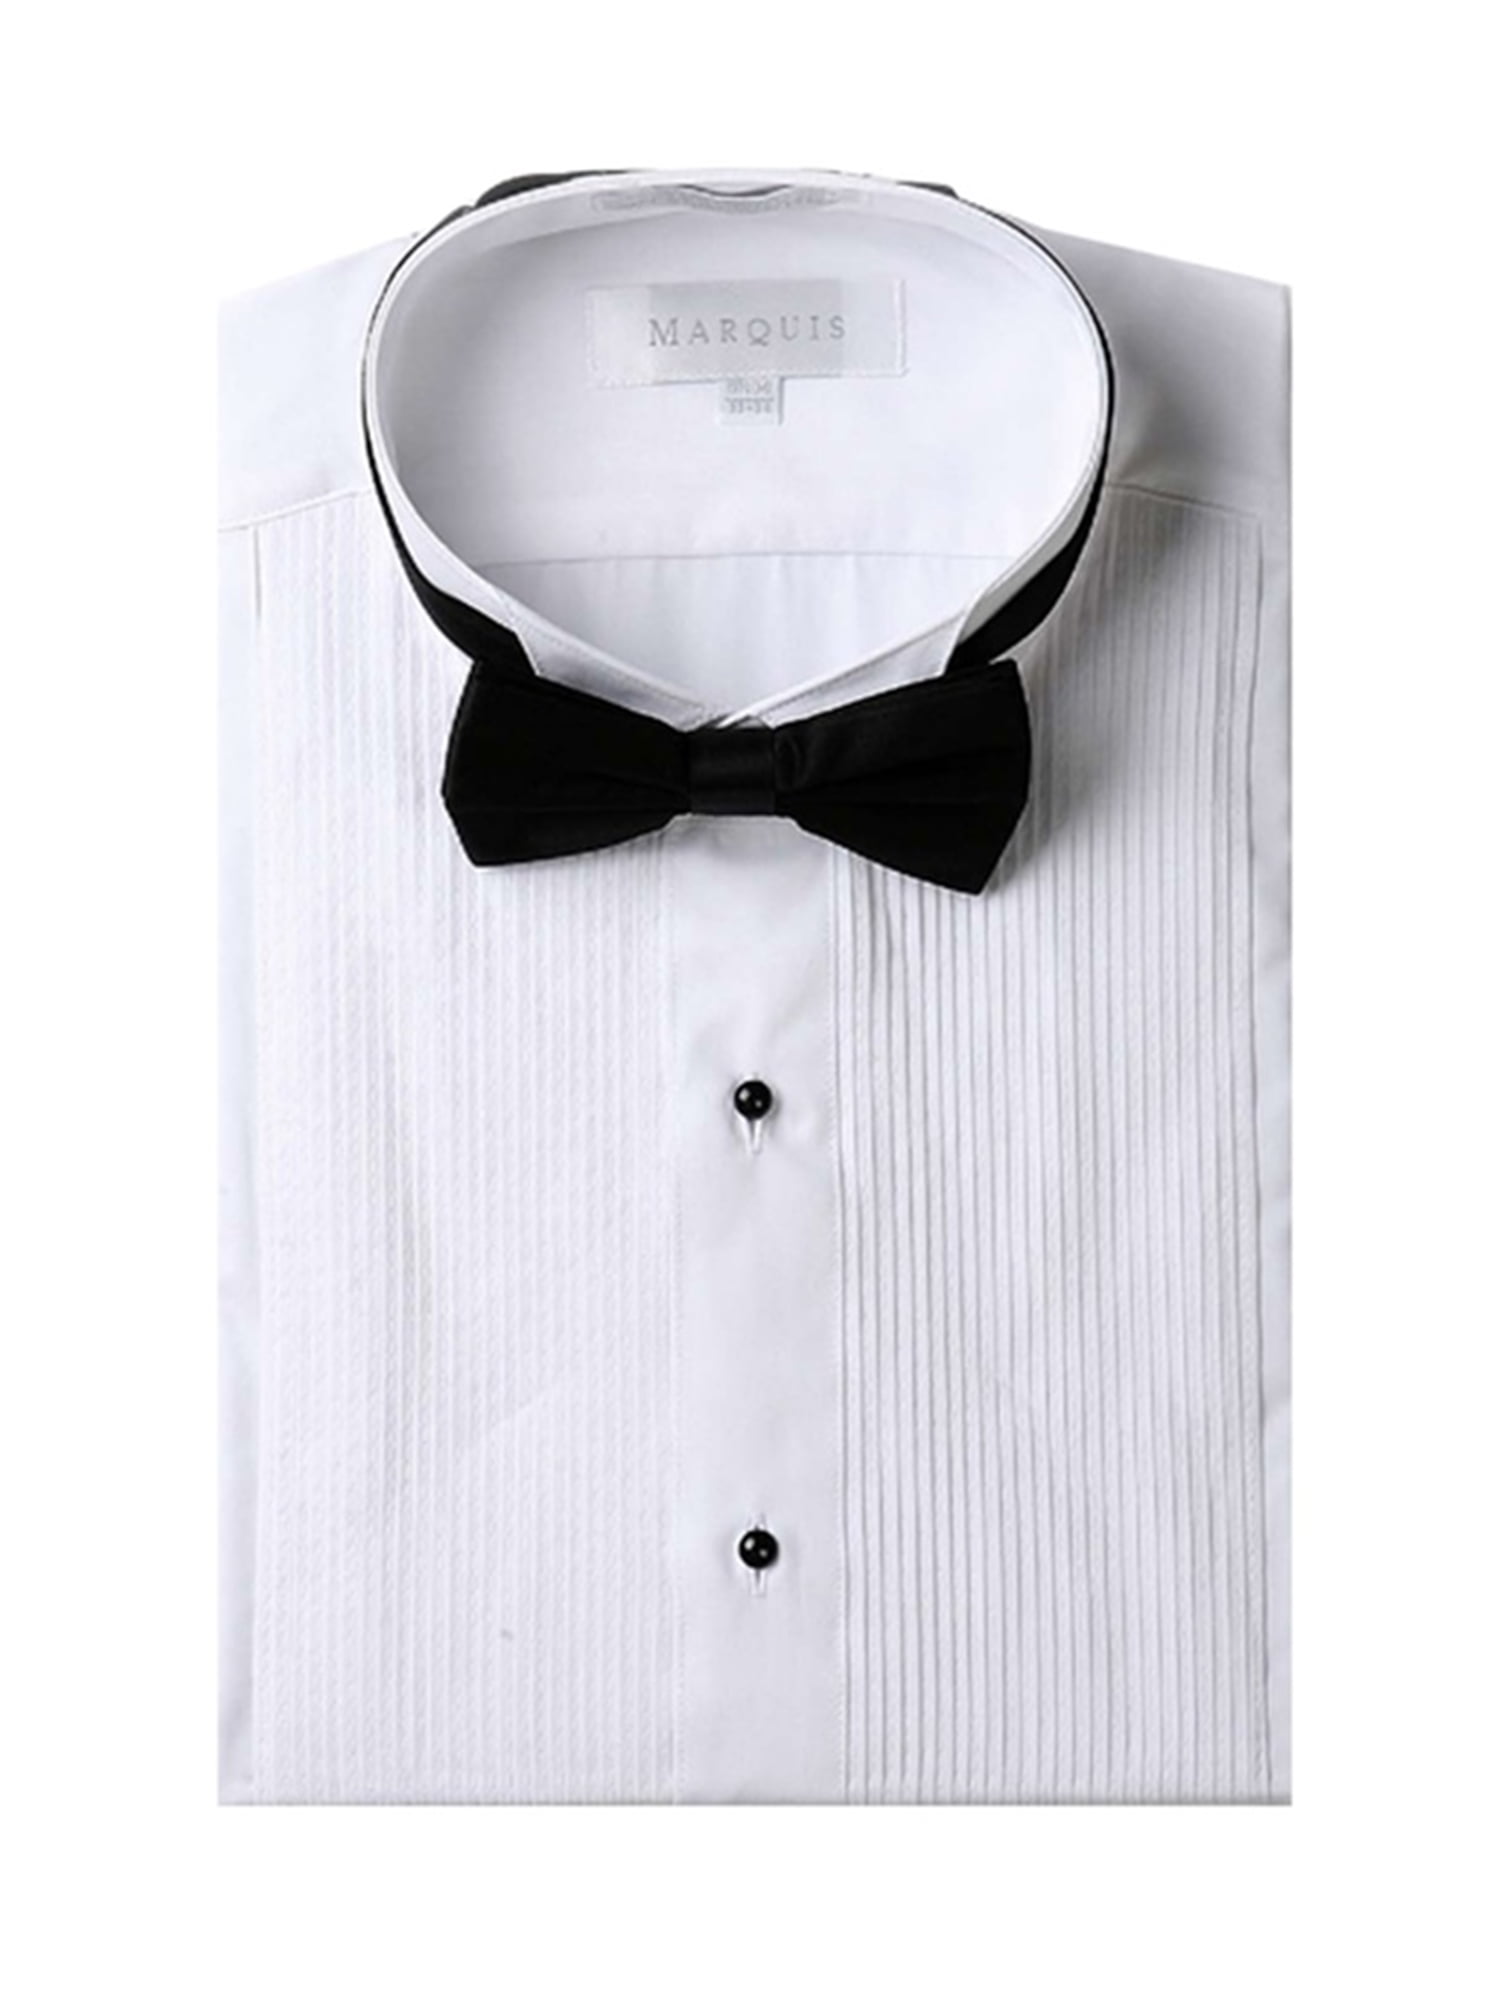 Men's 1/4 Wing Tip Collar White Tuxedo Shirt with Black Bowtie 